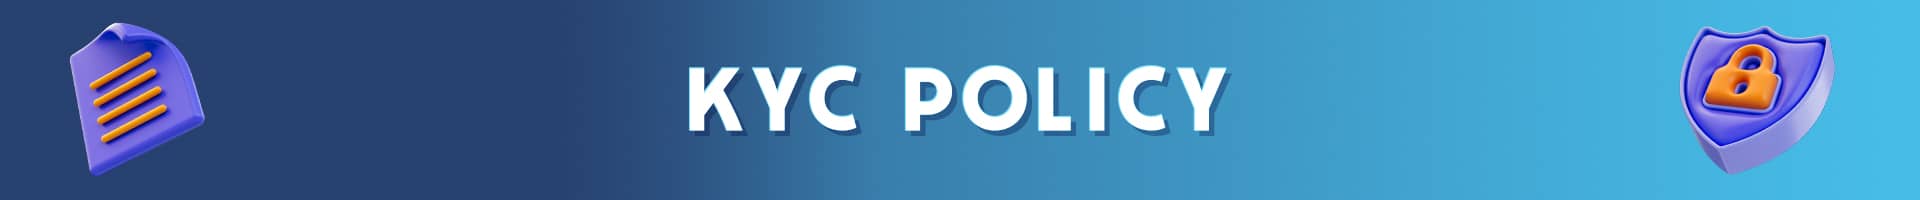 KyC Policy banner desktop